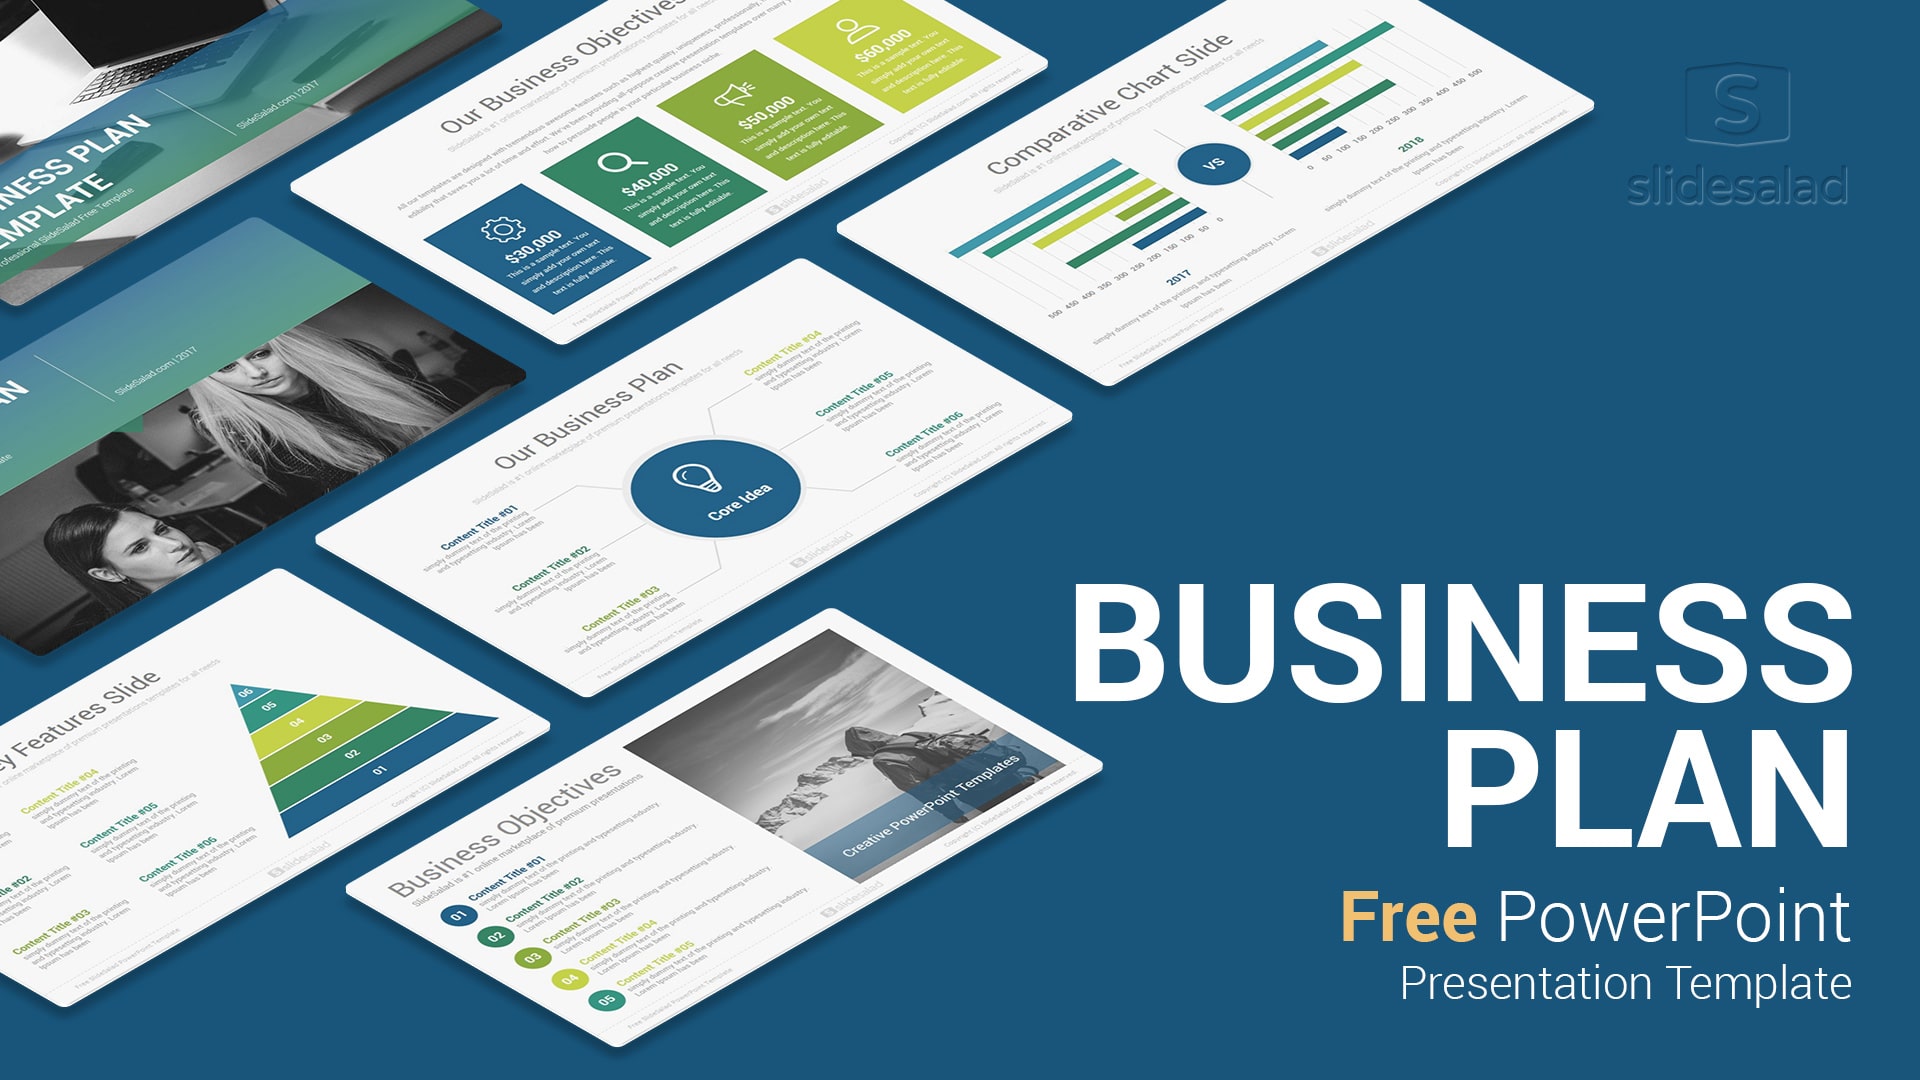 Business Plan Free Powerpoint Presentation Template Slidesalad